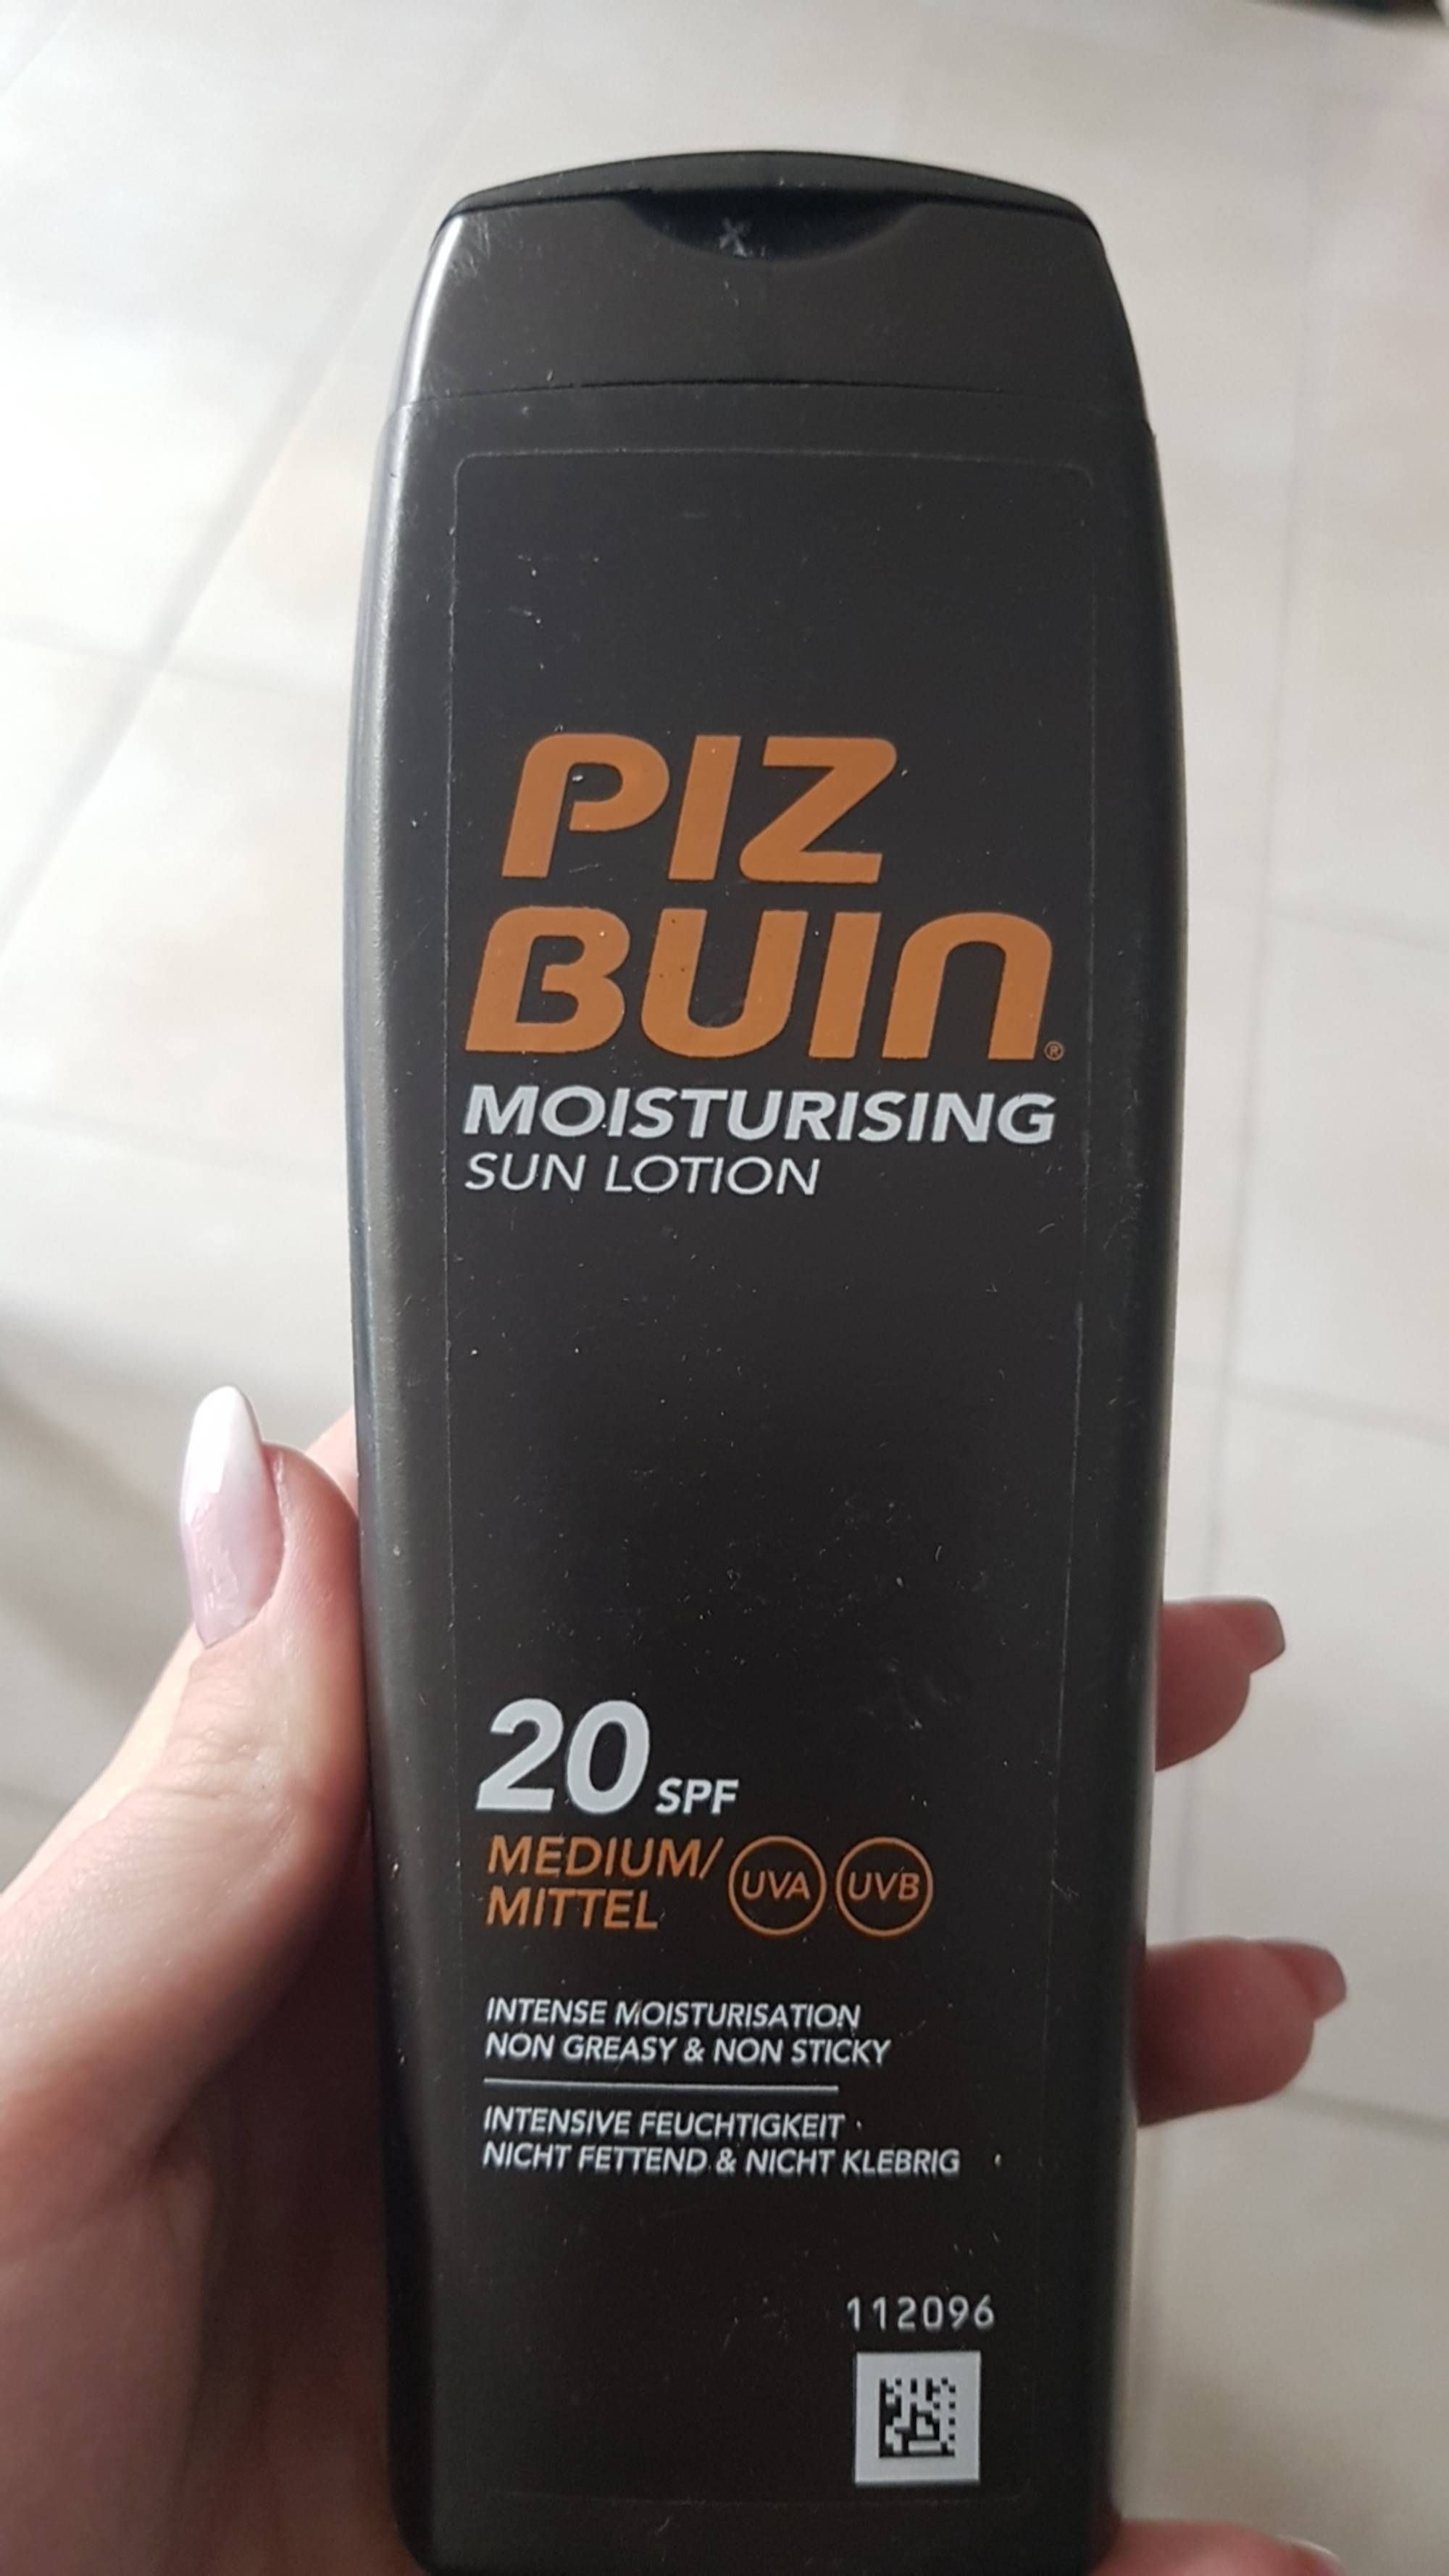 PIZ BUIN - Mosturising sun lotion 20 SPF medium